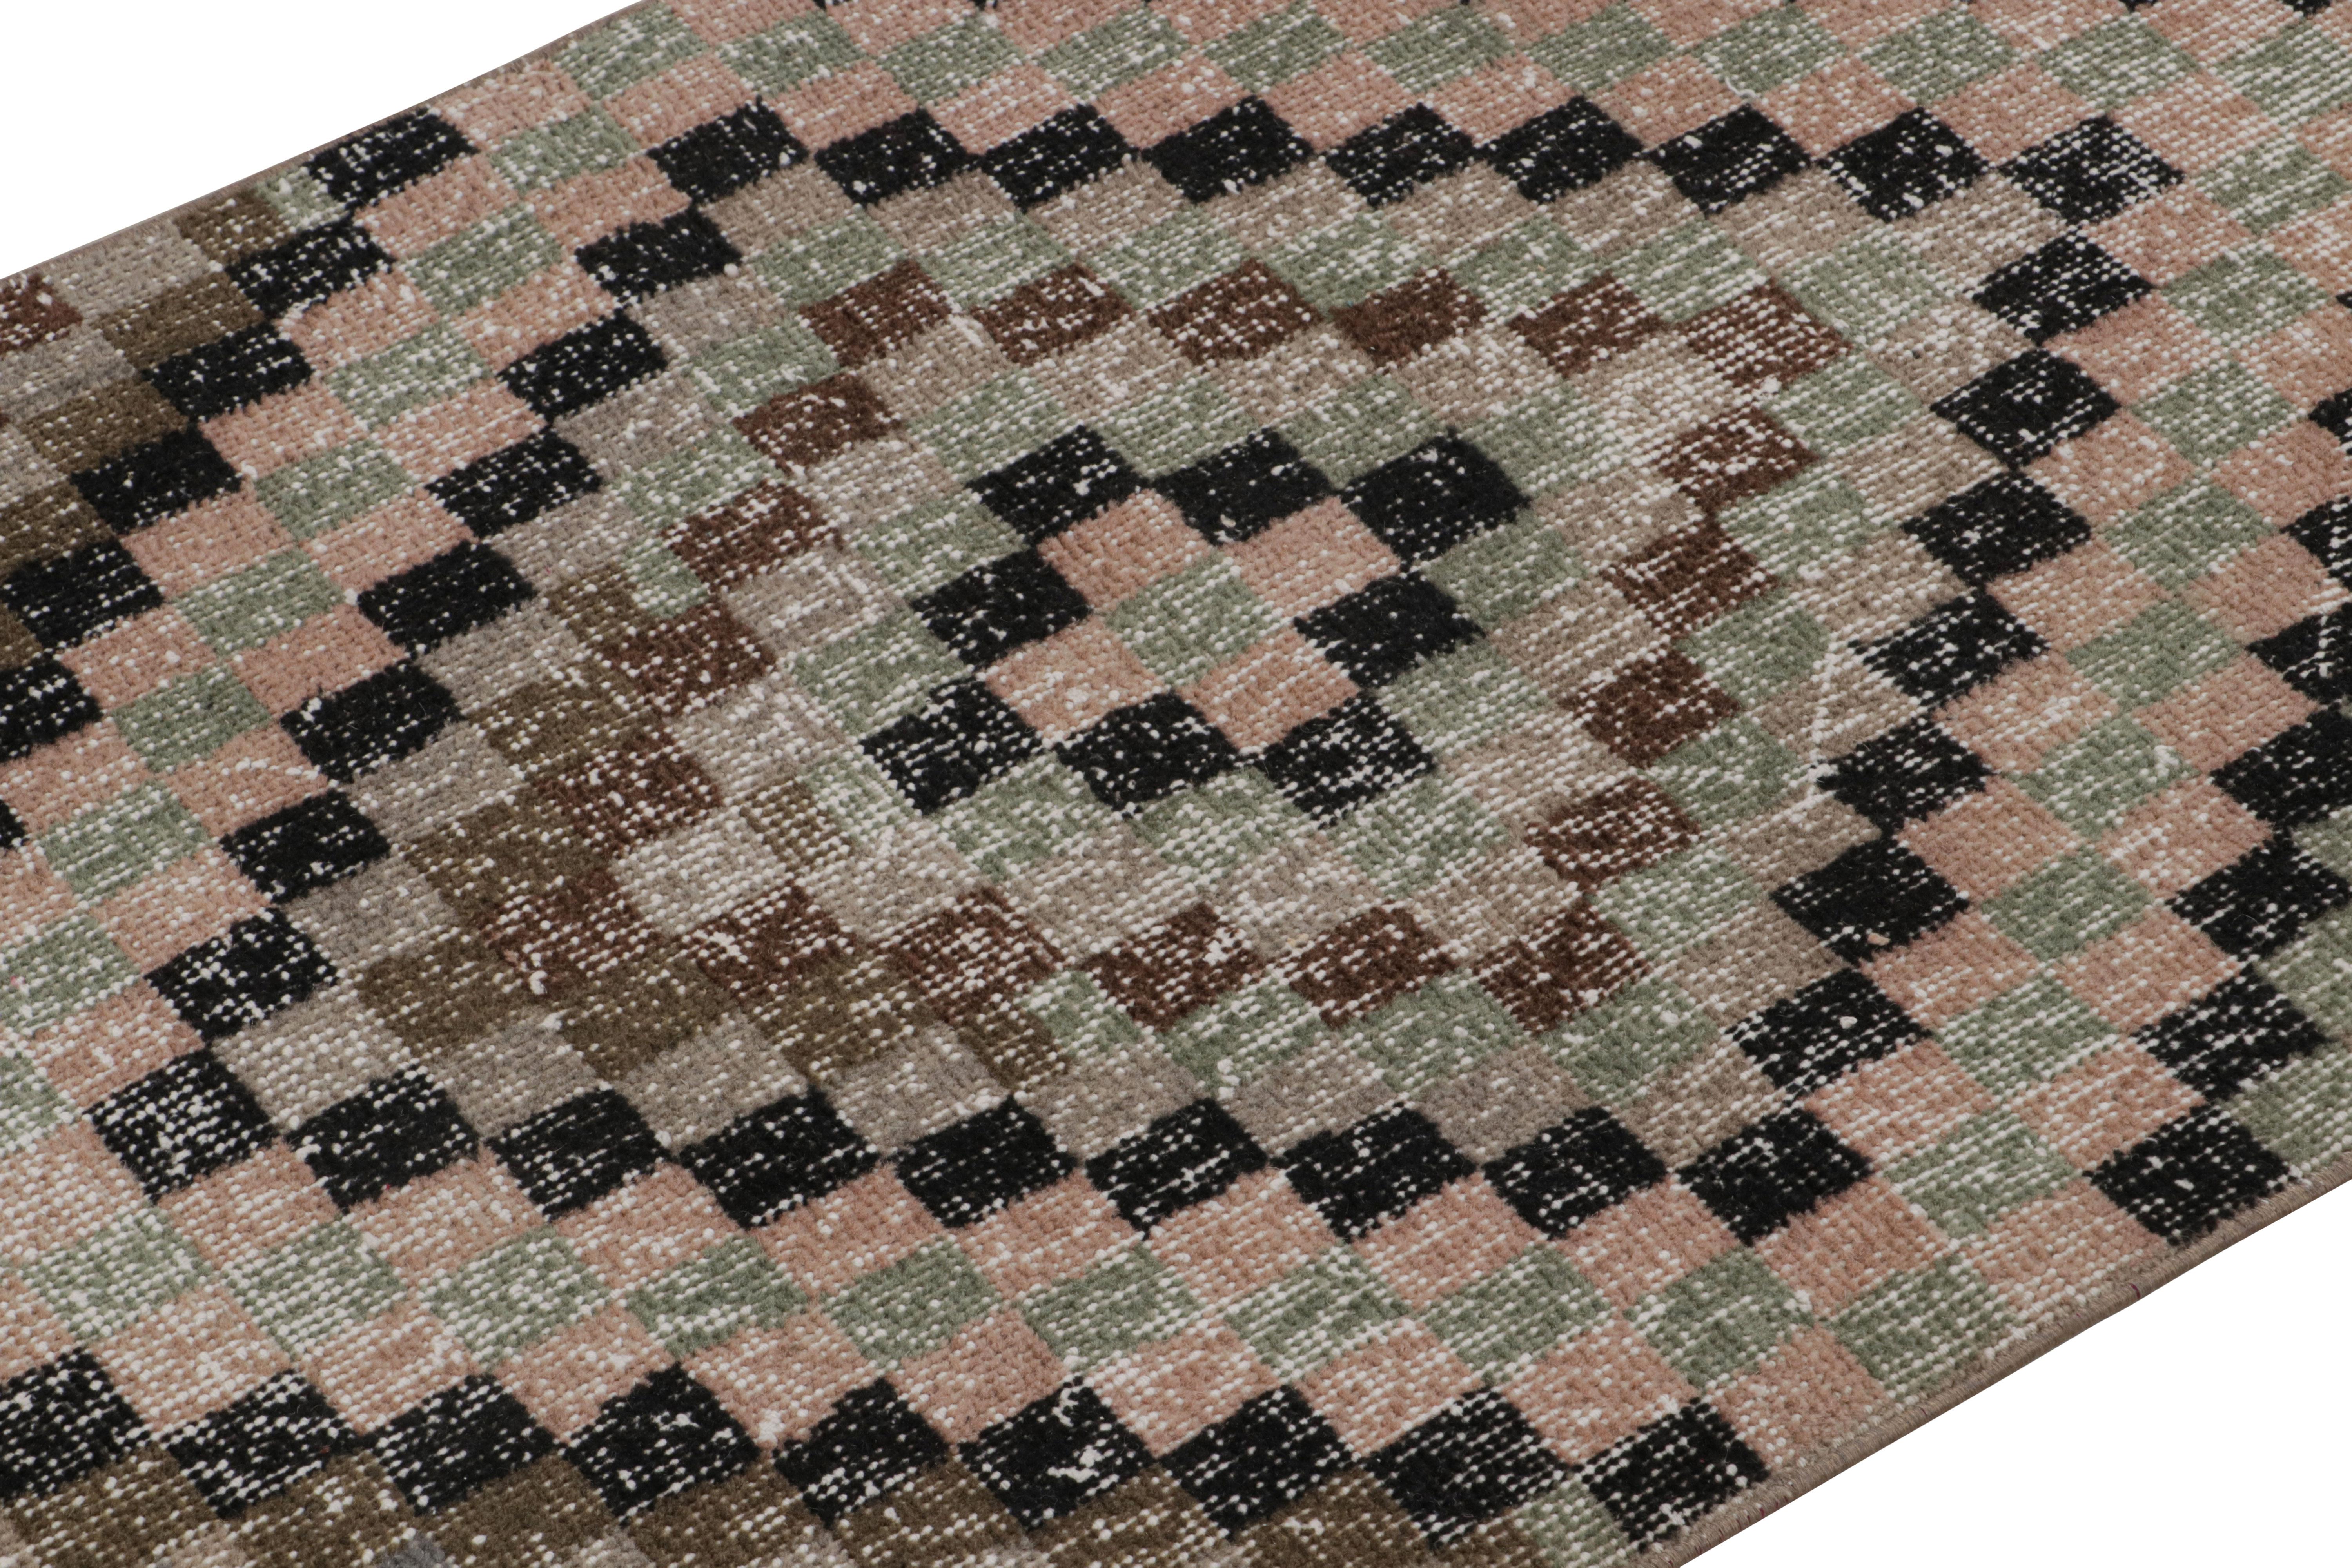 Hand-Knotted Vintage Zeki Müren Runner Rug in Polychrome Geometric Pattern, from Rug & Kilim For Sale